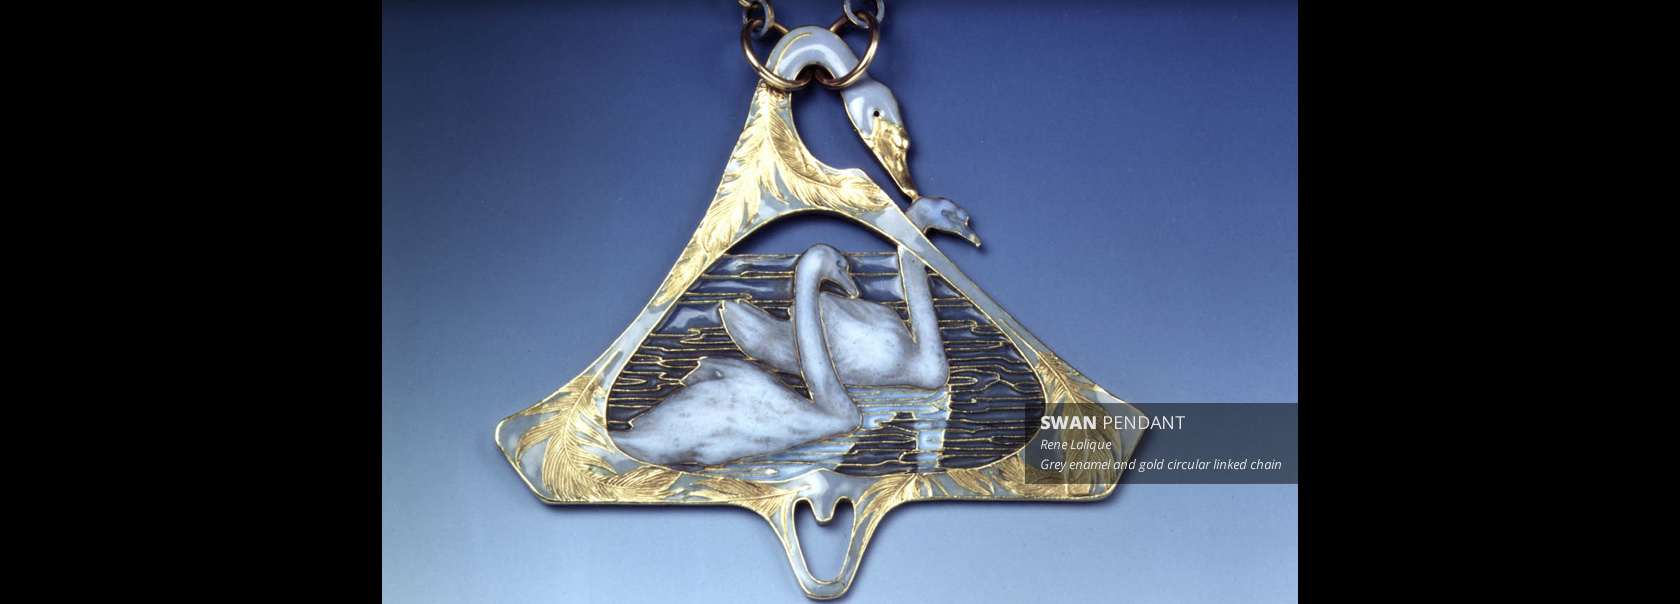 Swan Pendant by Rene Lalique